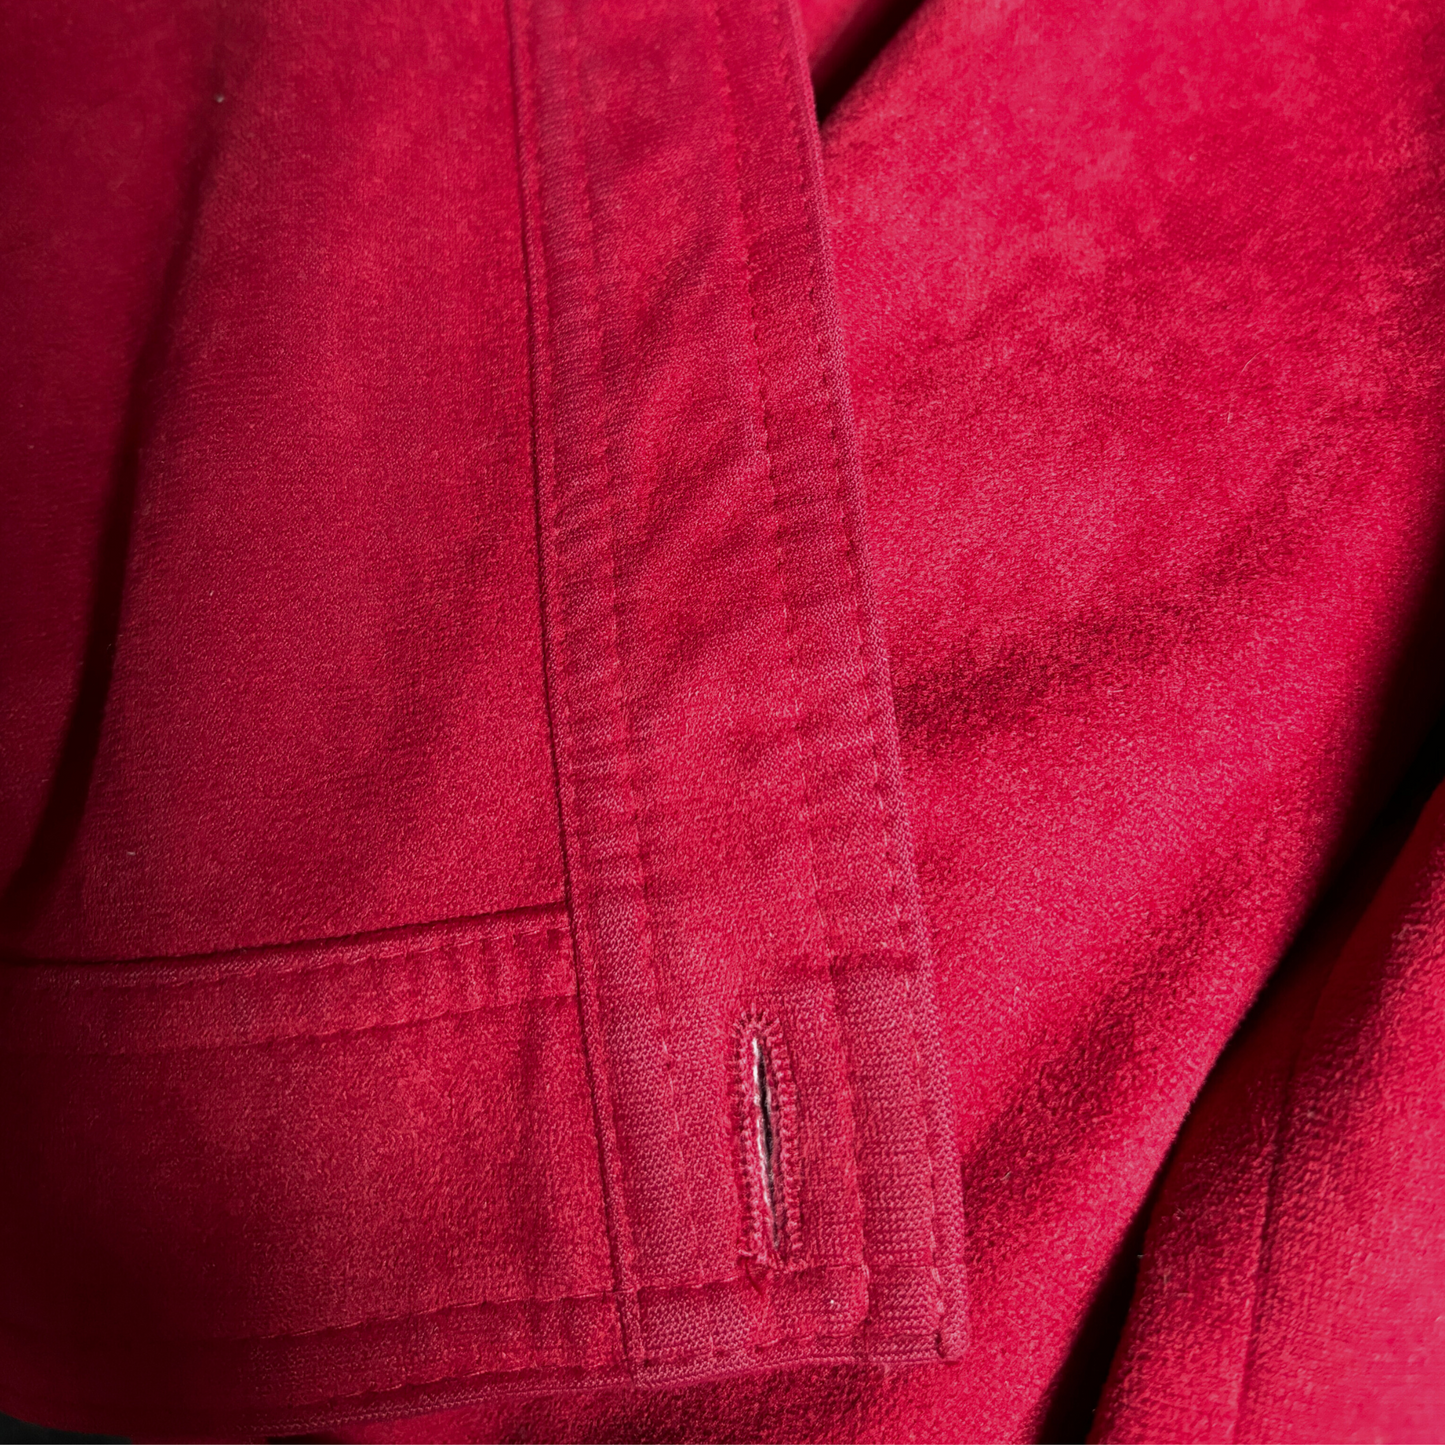 Vintage 80s Cherry Red Moleskin Blouson Style Jacket. Approx UK size 8- 12